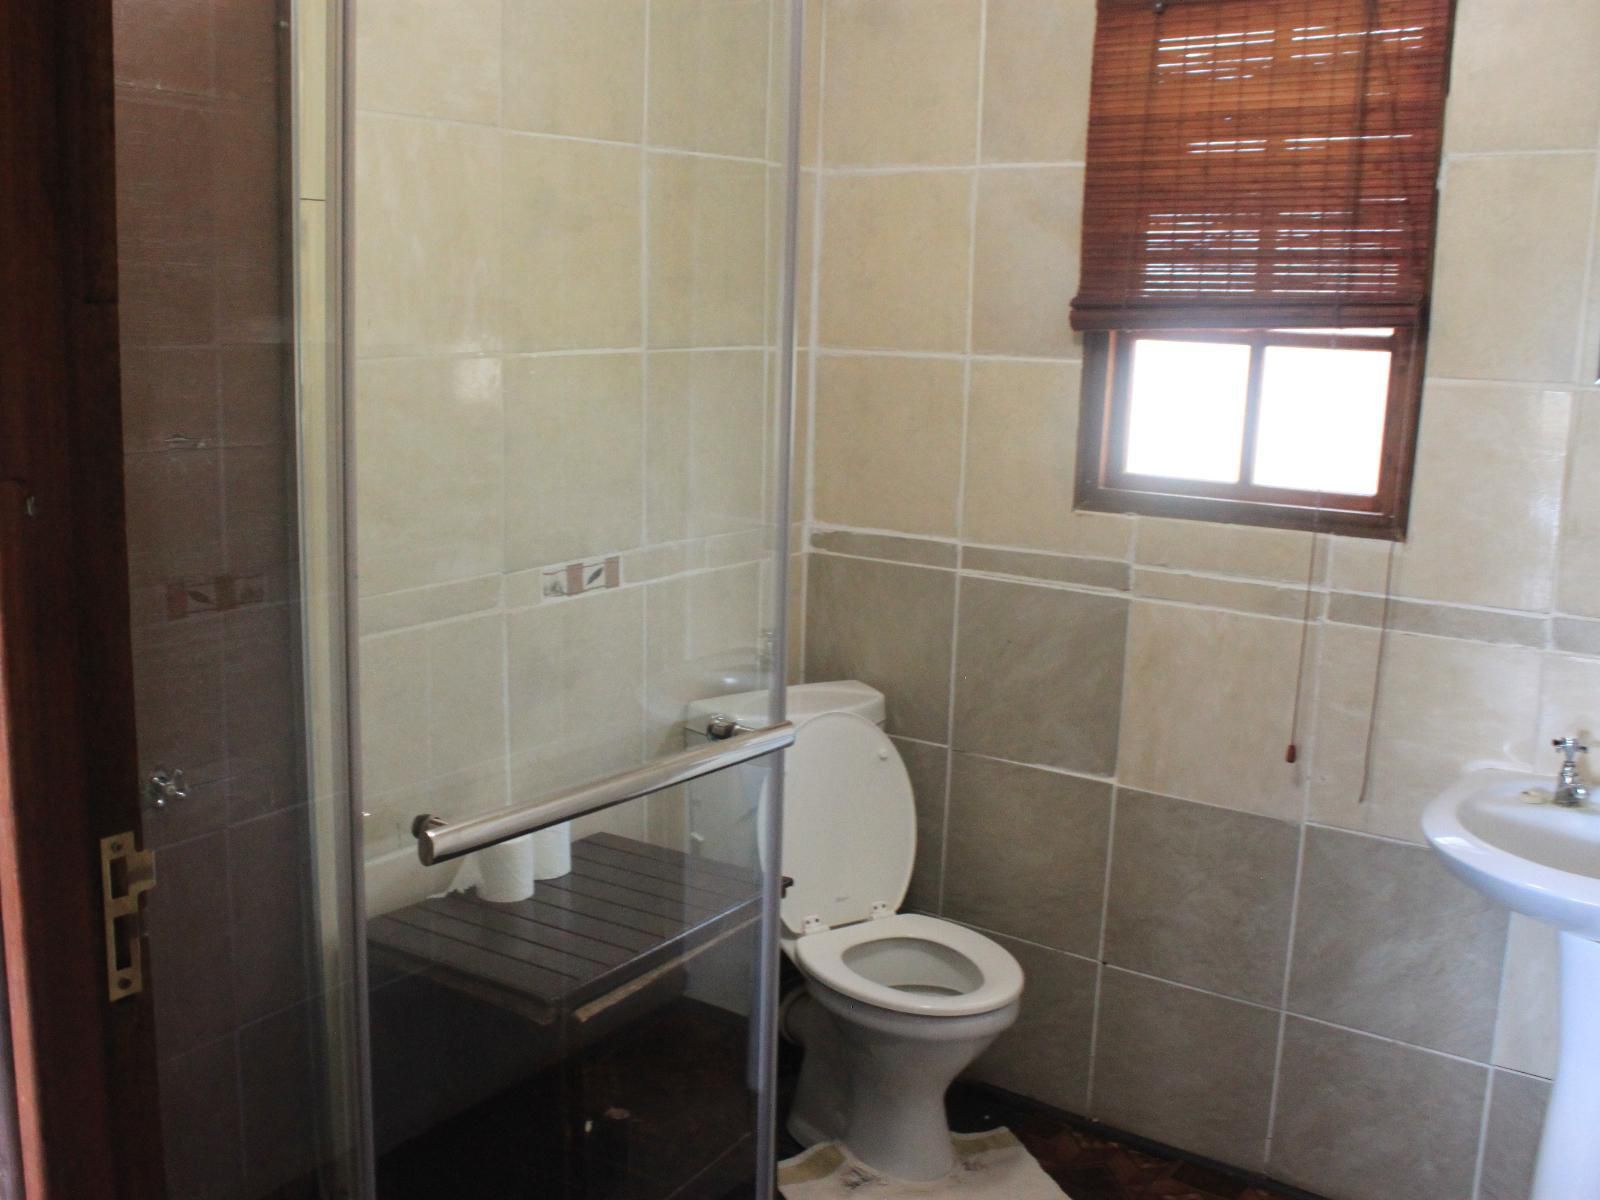 Grootgeluk Bush Camp Mookgopong Naboomspruit Limpopo Province South Africa Bathroom